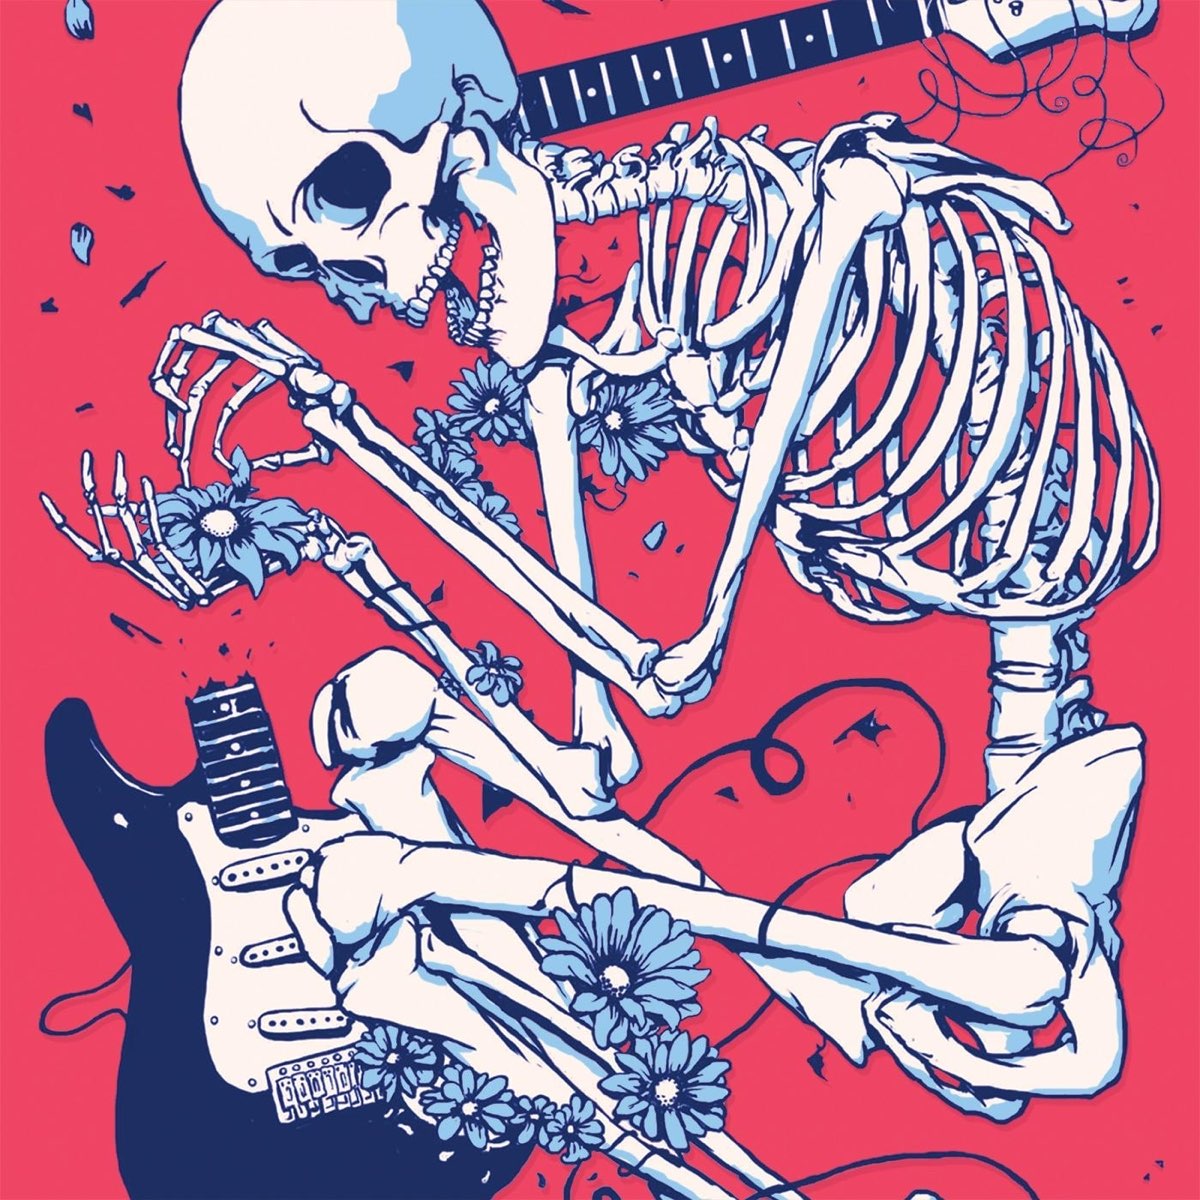 Bone art. Bones обложки альбомов. Bones (музыкант). Bones музыкант альбомы. Bones музыкант обложка.